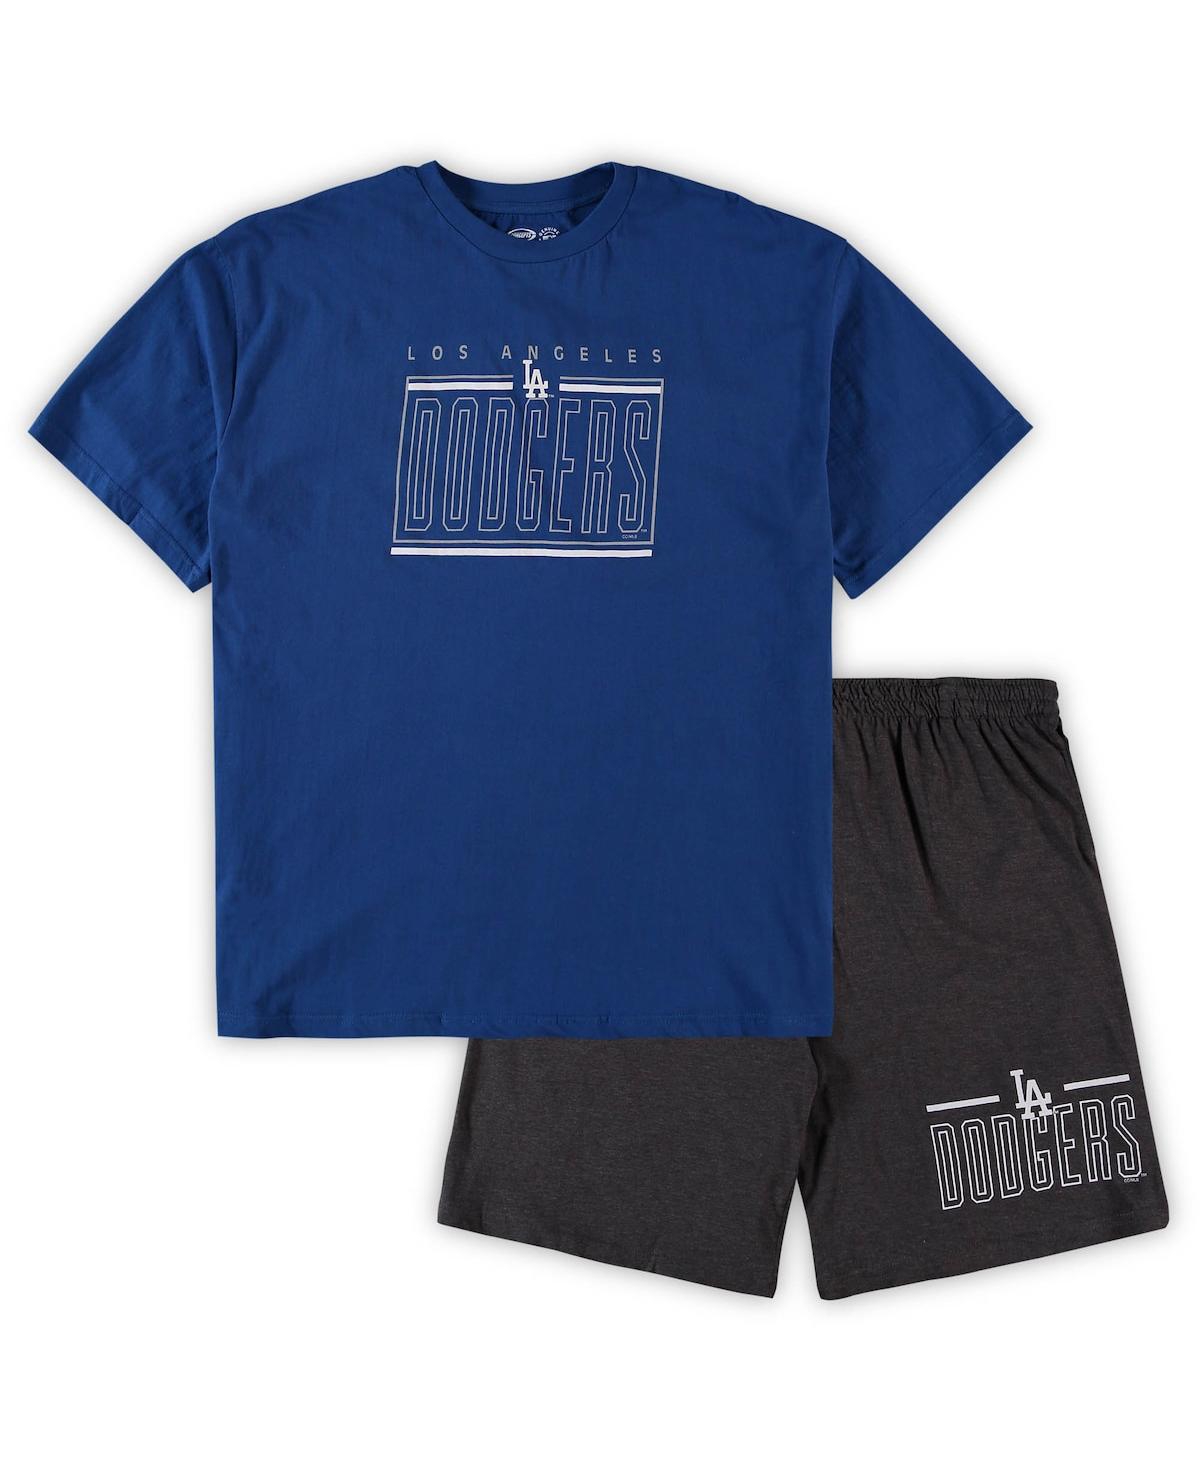 Men's Royal and Charcoal Los Angeles Dodgers Big and Tall T-shirt and Shorts Sleep Set - Royal, Charcoal